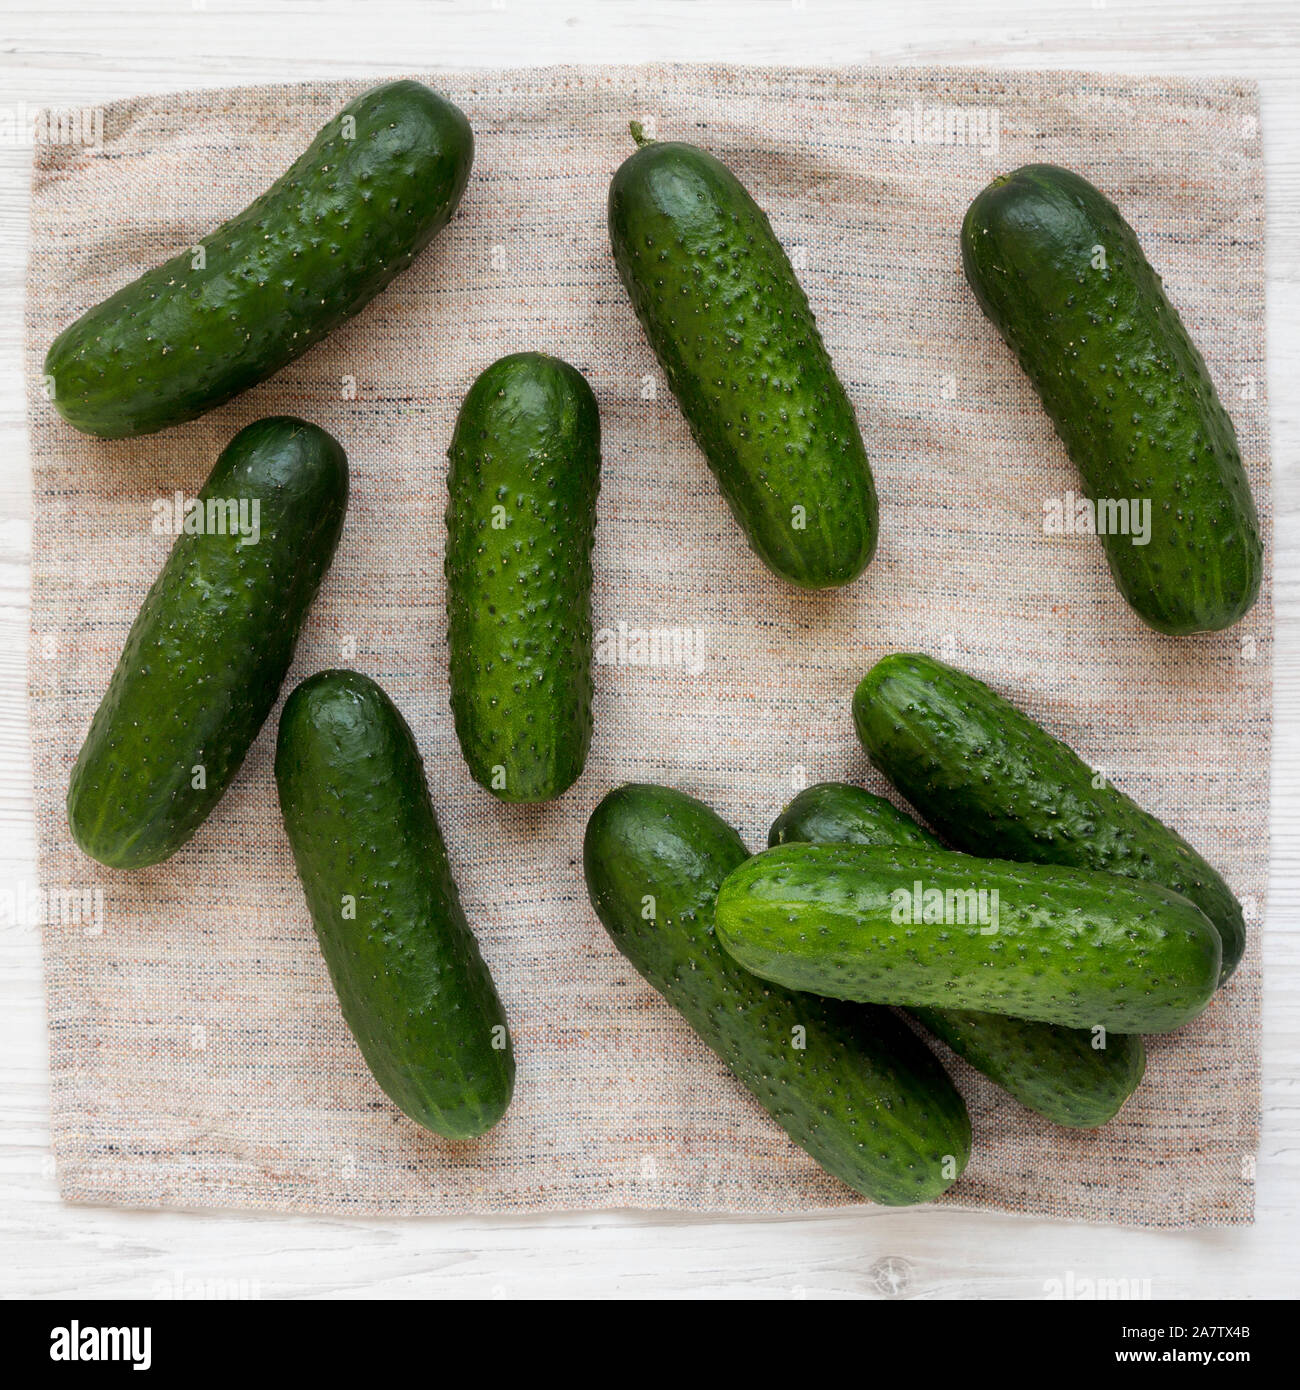 https://c8.alamy.com/comp/2A7TX4B/fresh-organic-mini-baby-cucumbers-on-cloth-view-from-above-flat-lay-top-view-overhead-2A7TX4B.jpg